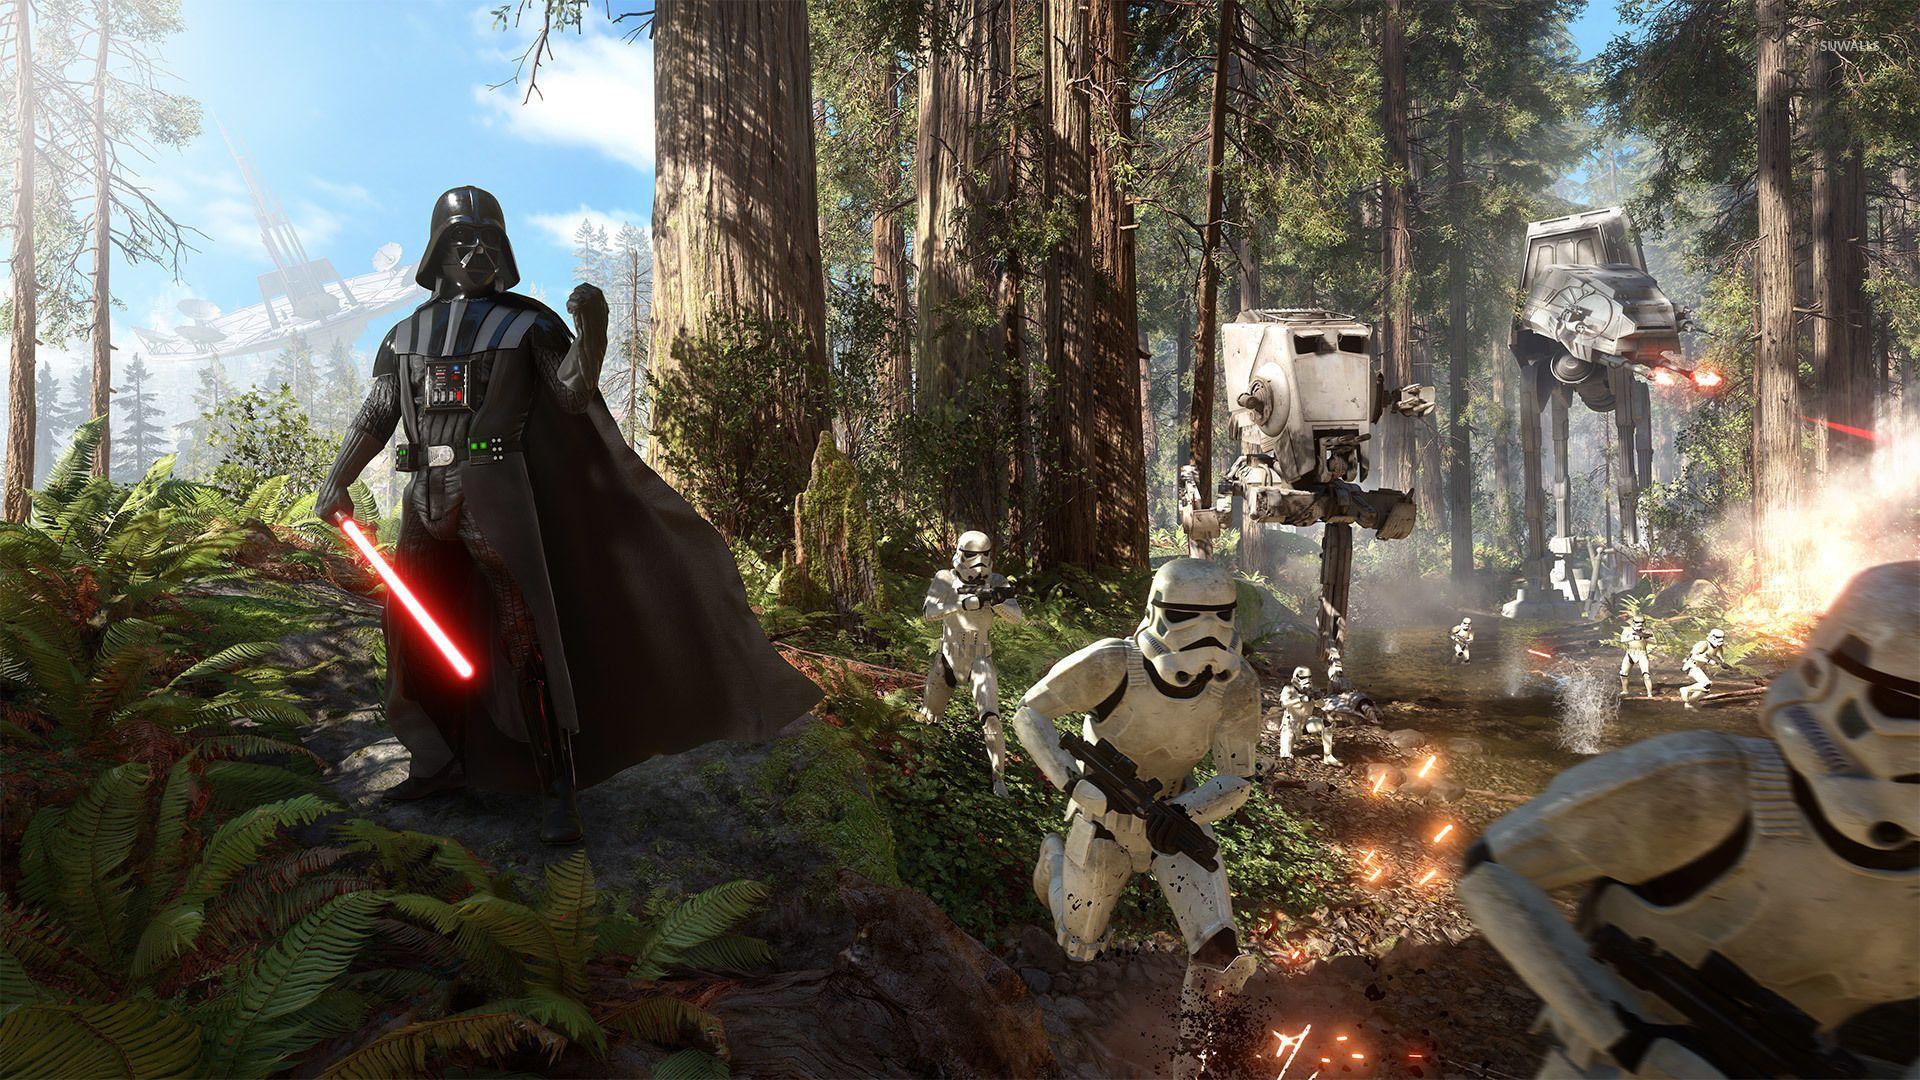 Darth Vader and Stormtroopers in Star Wars: Battlefront wallpaper wallpaper